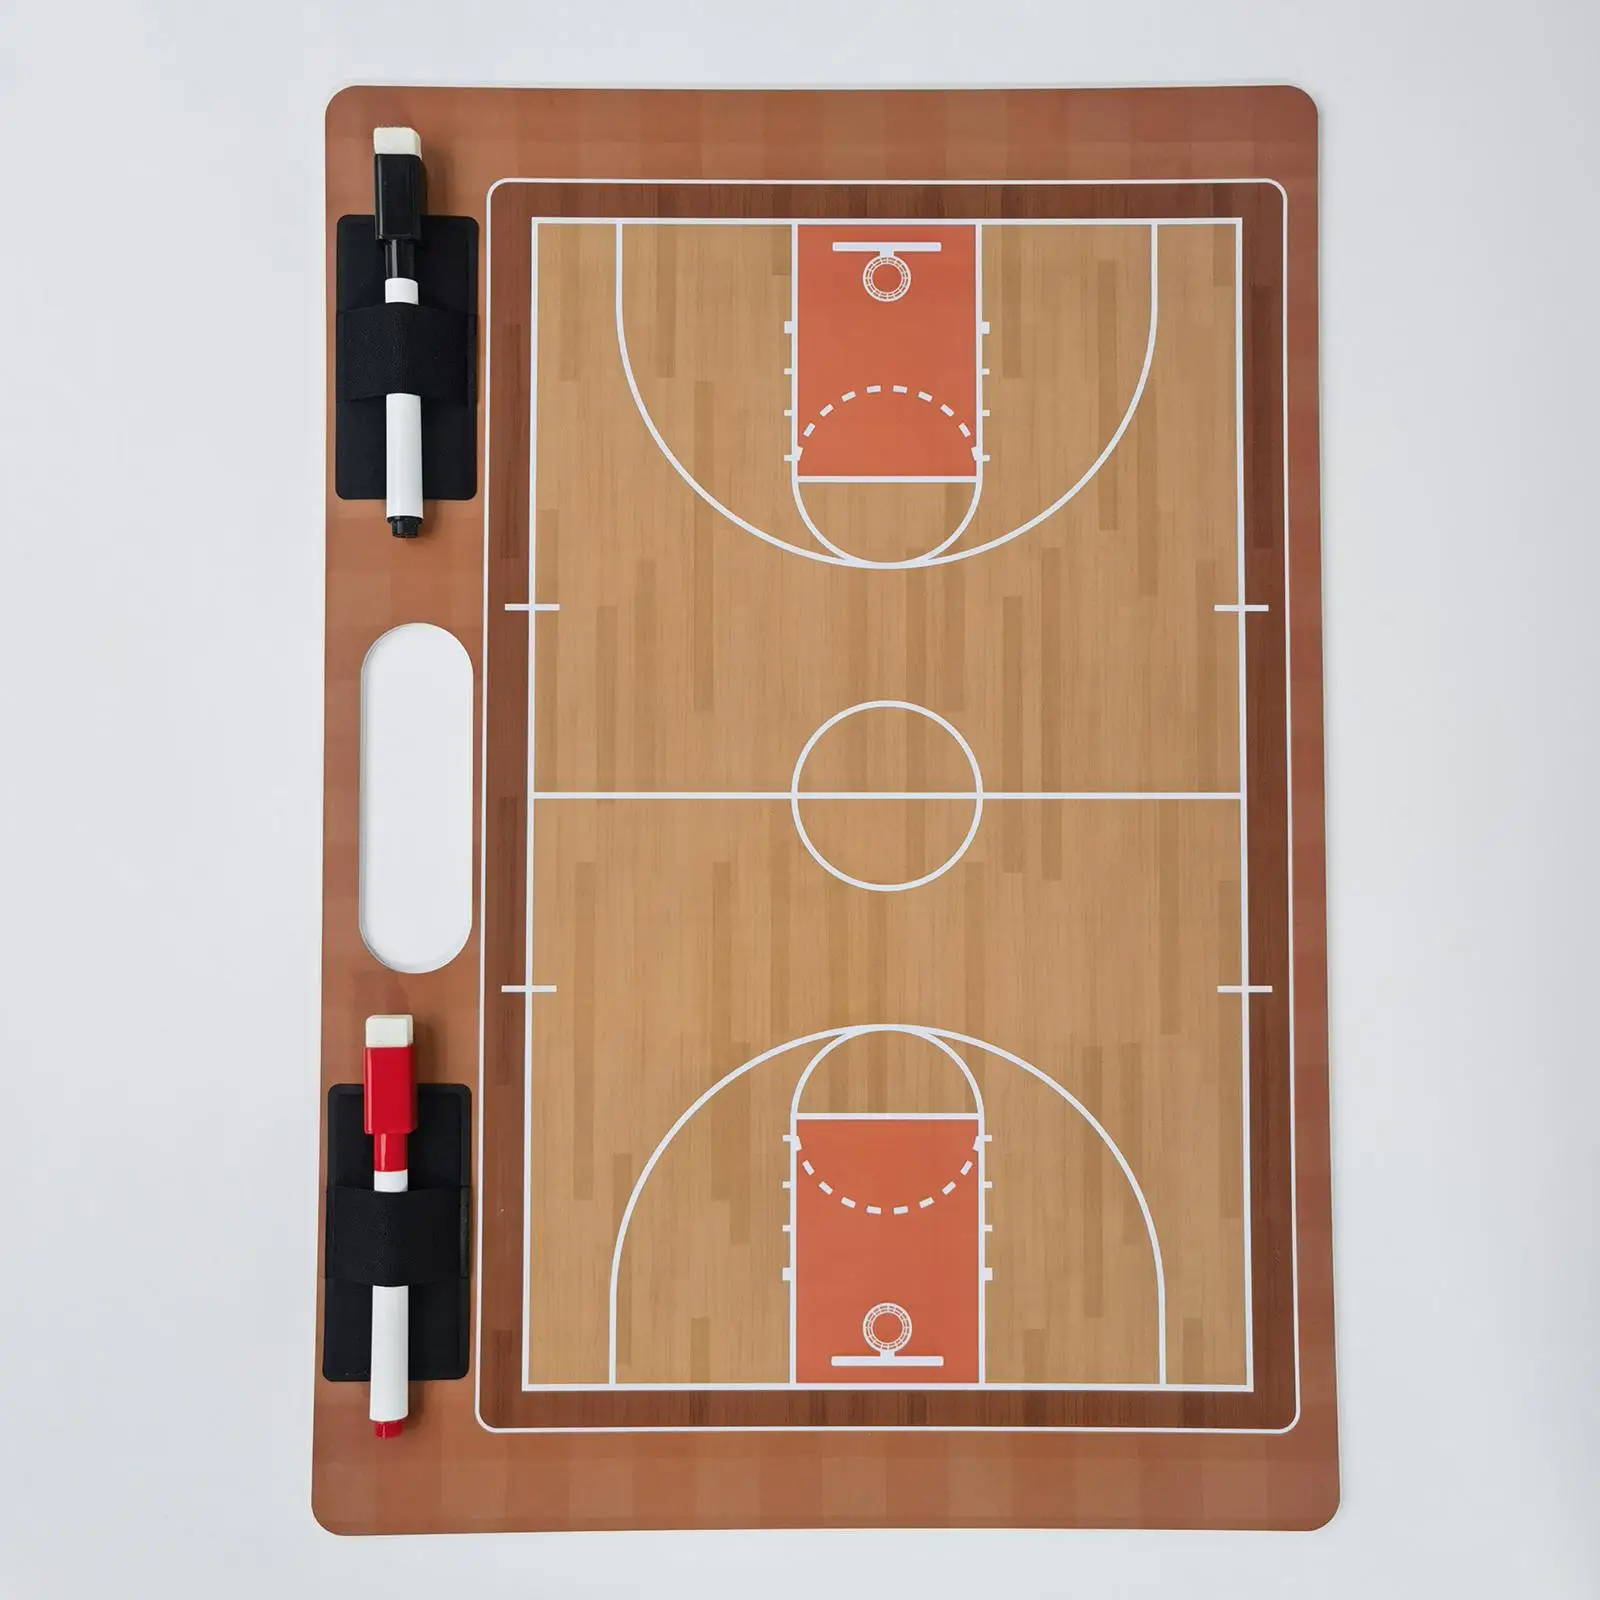 Dry Erase Play Board Equipment Basketball Clipboard Coaches Board Basketball Coaching Board for Gym Strategizing Plays Coach